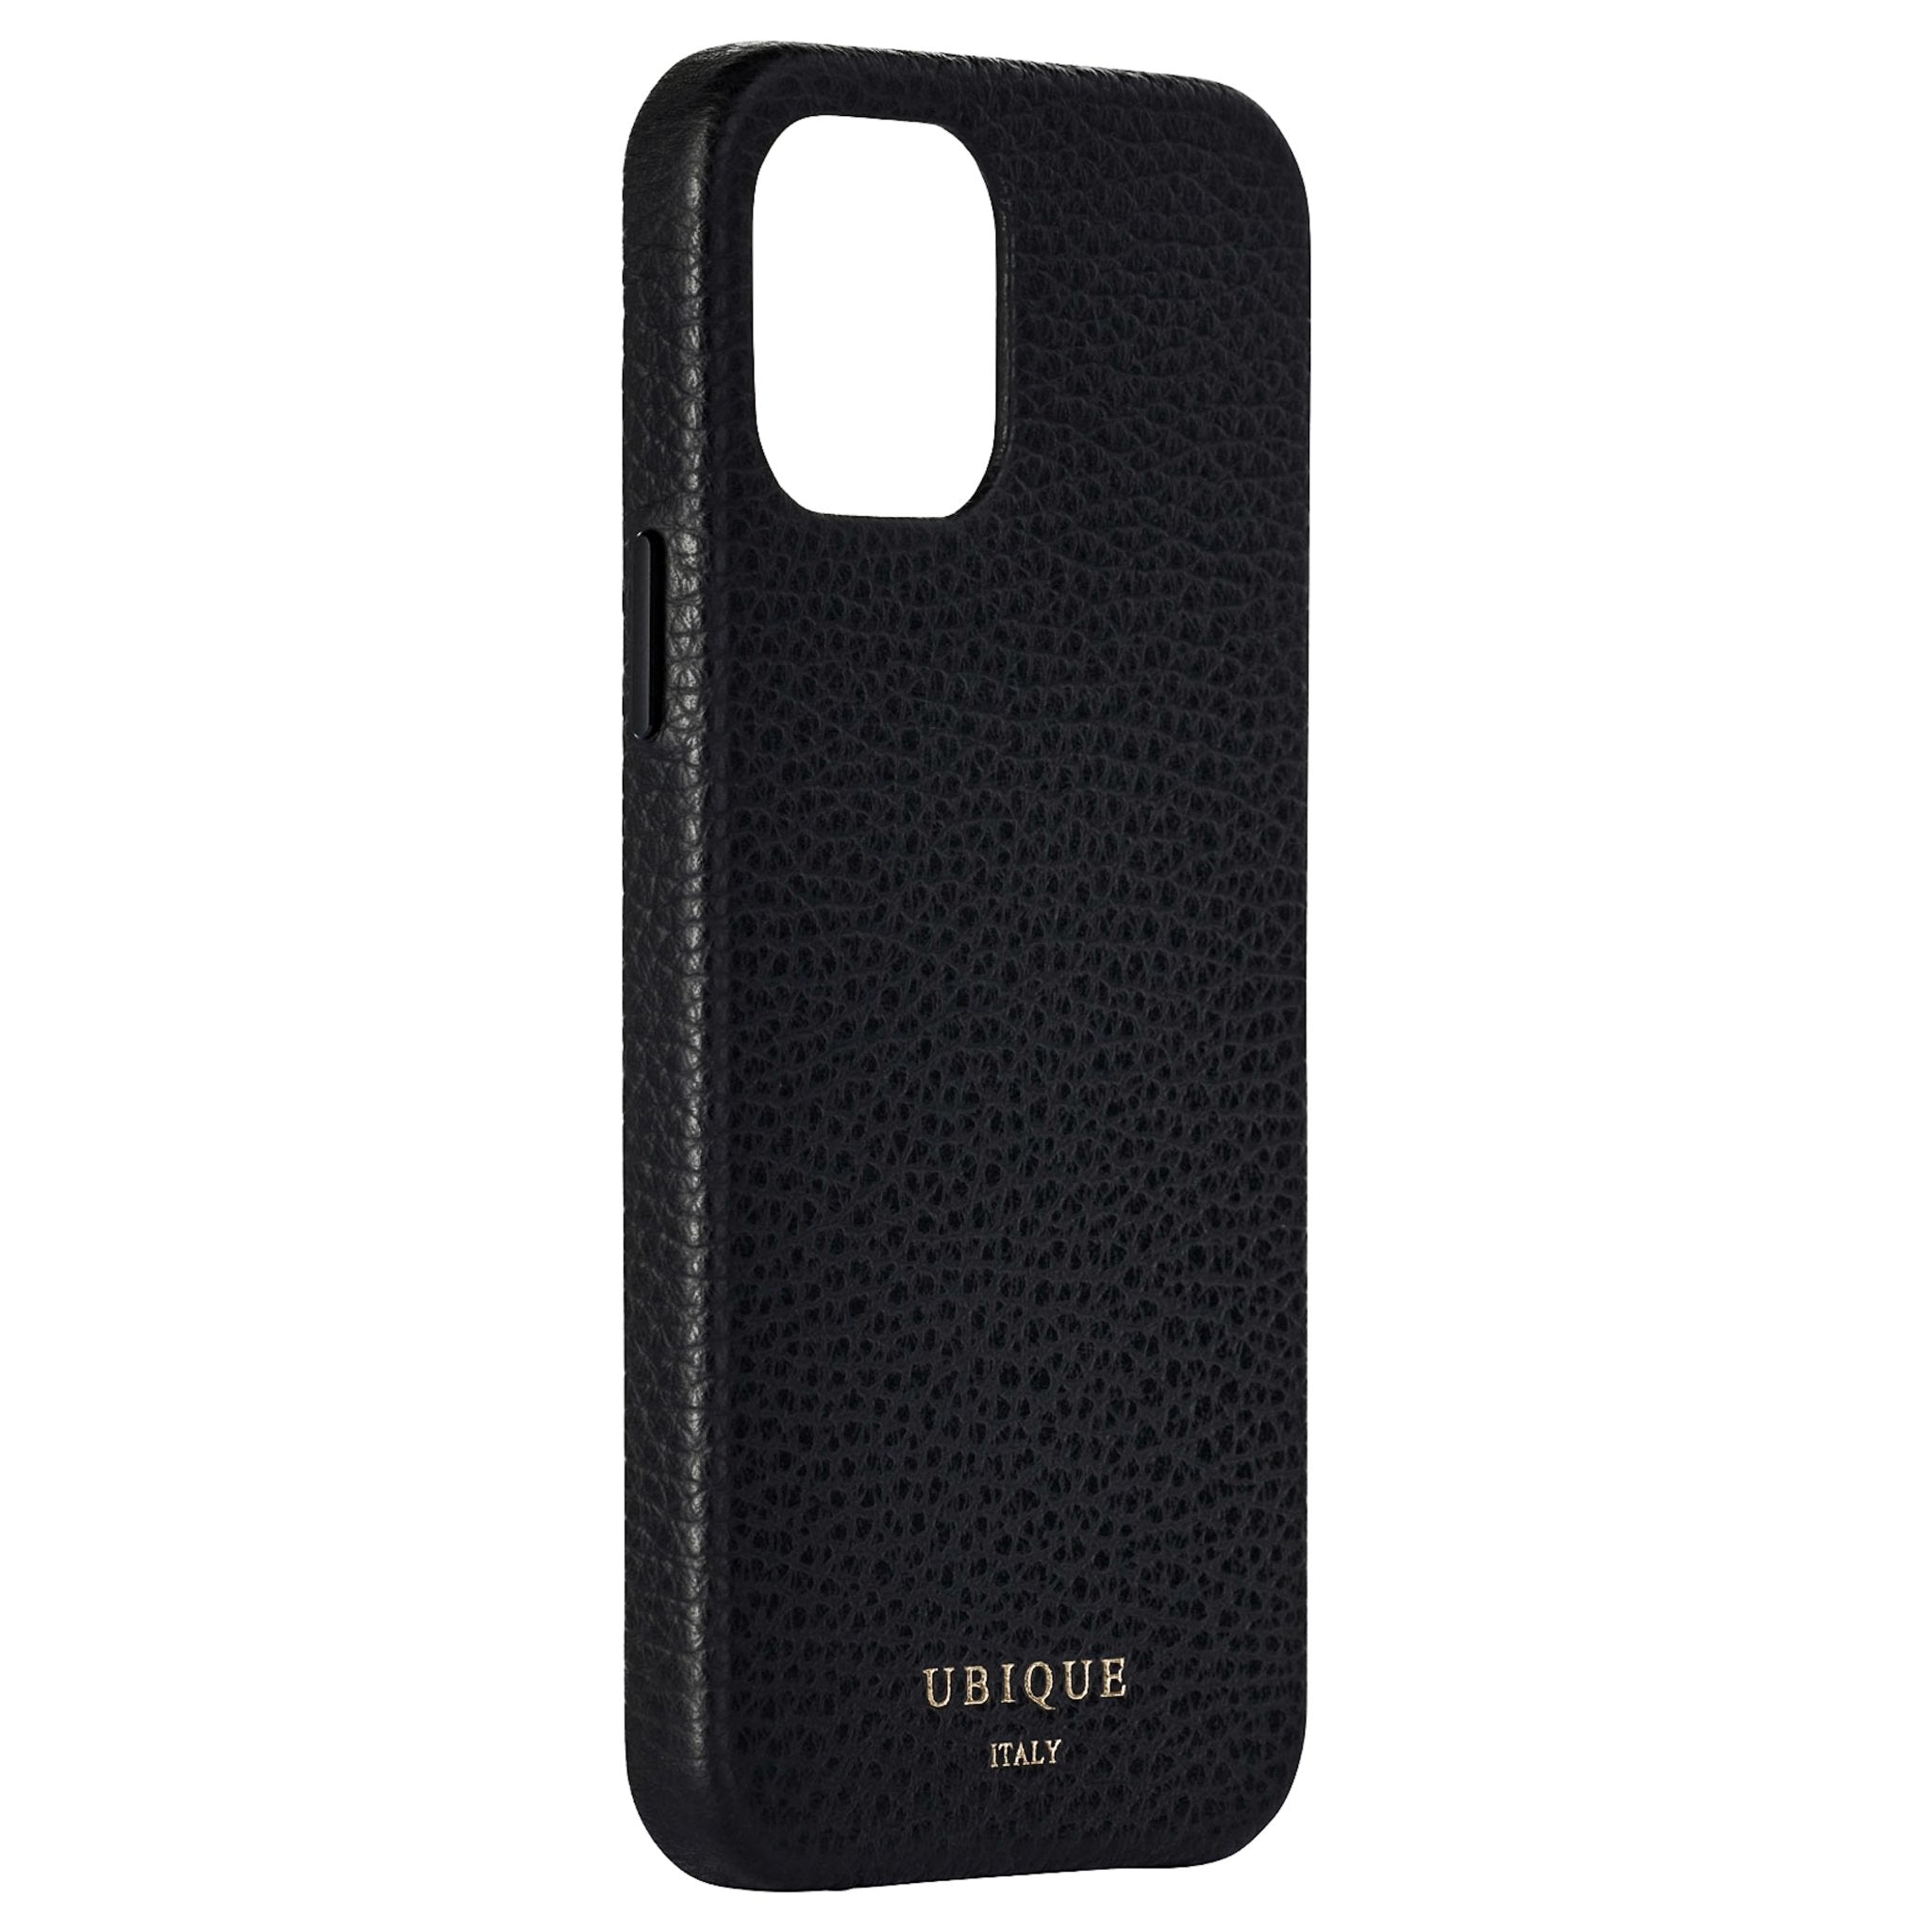 Ubique Italy Luxury iPhone Case 13 Pebble Grain Leather Black Angled